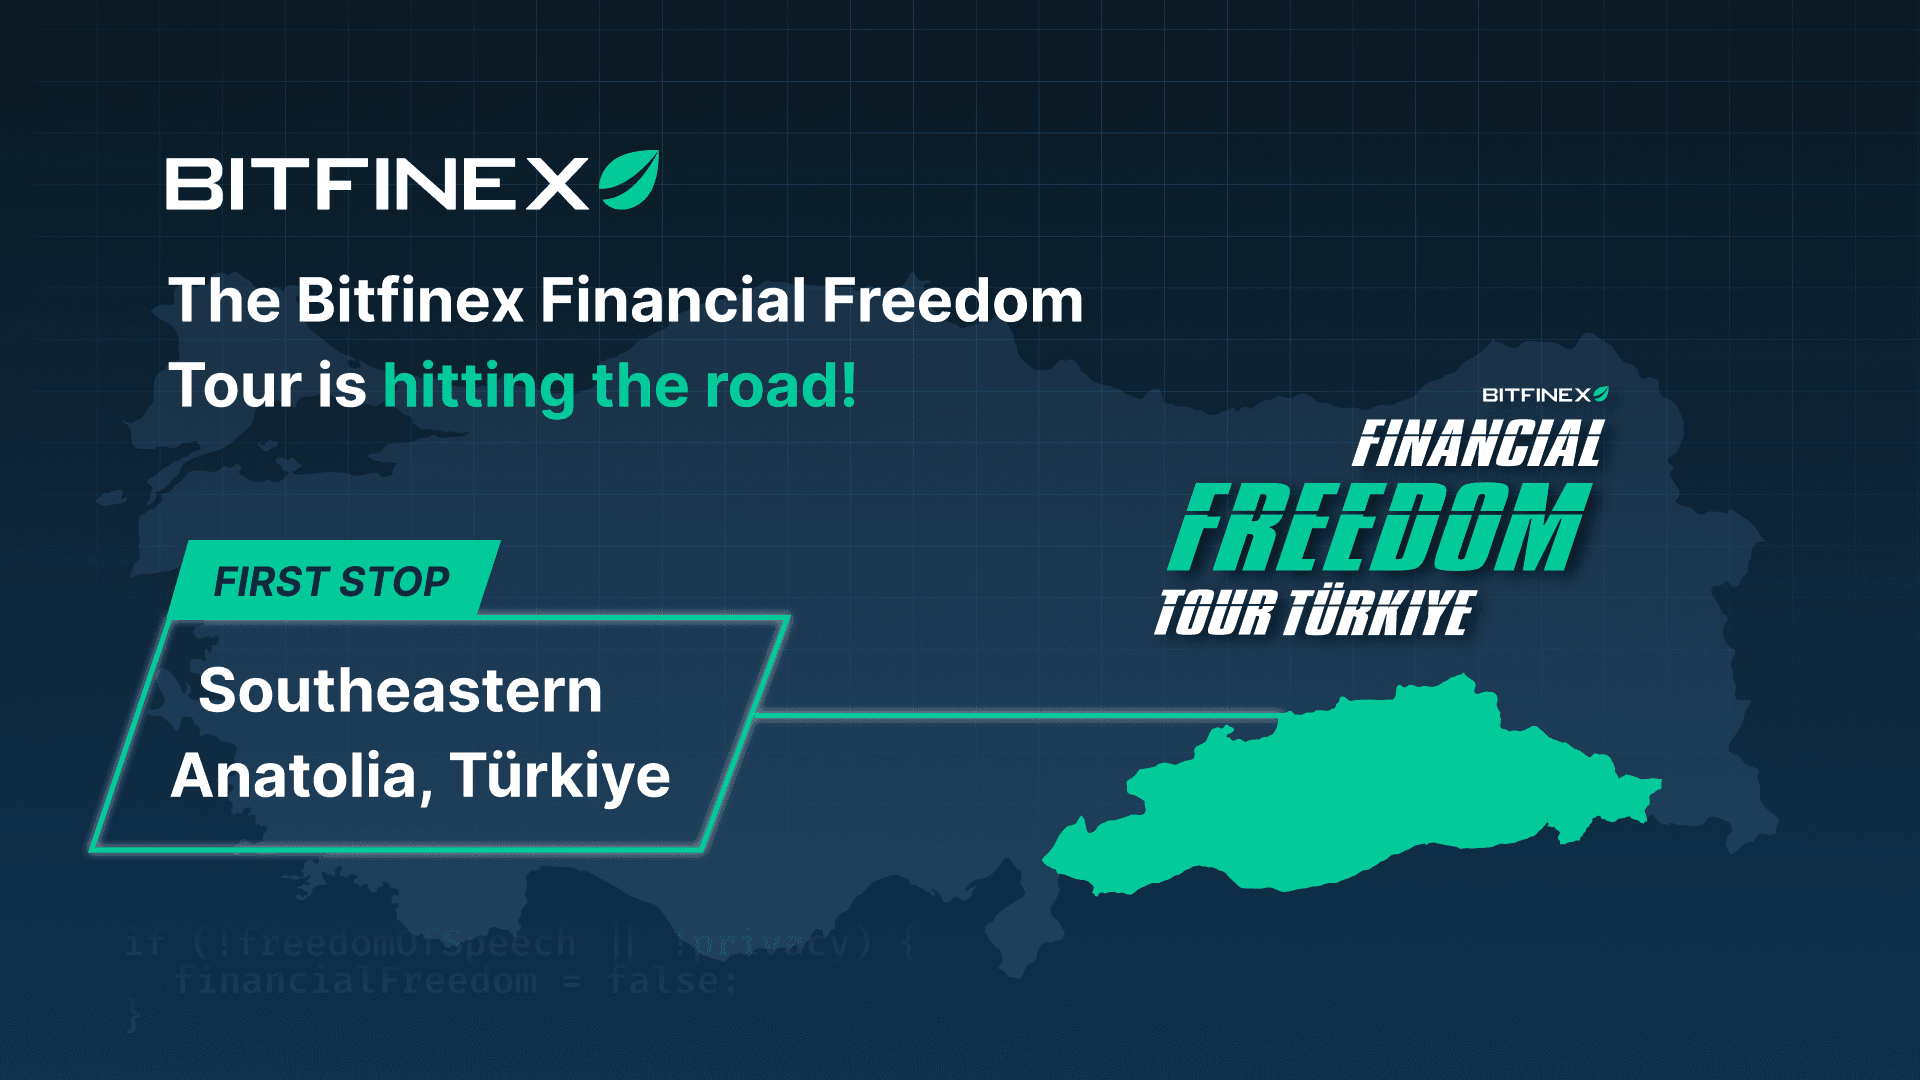 The Bitfinex Financial Freedom Tour is hitting the road: First stop, Southeastern Anatolia, Türkiye  